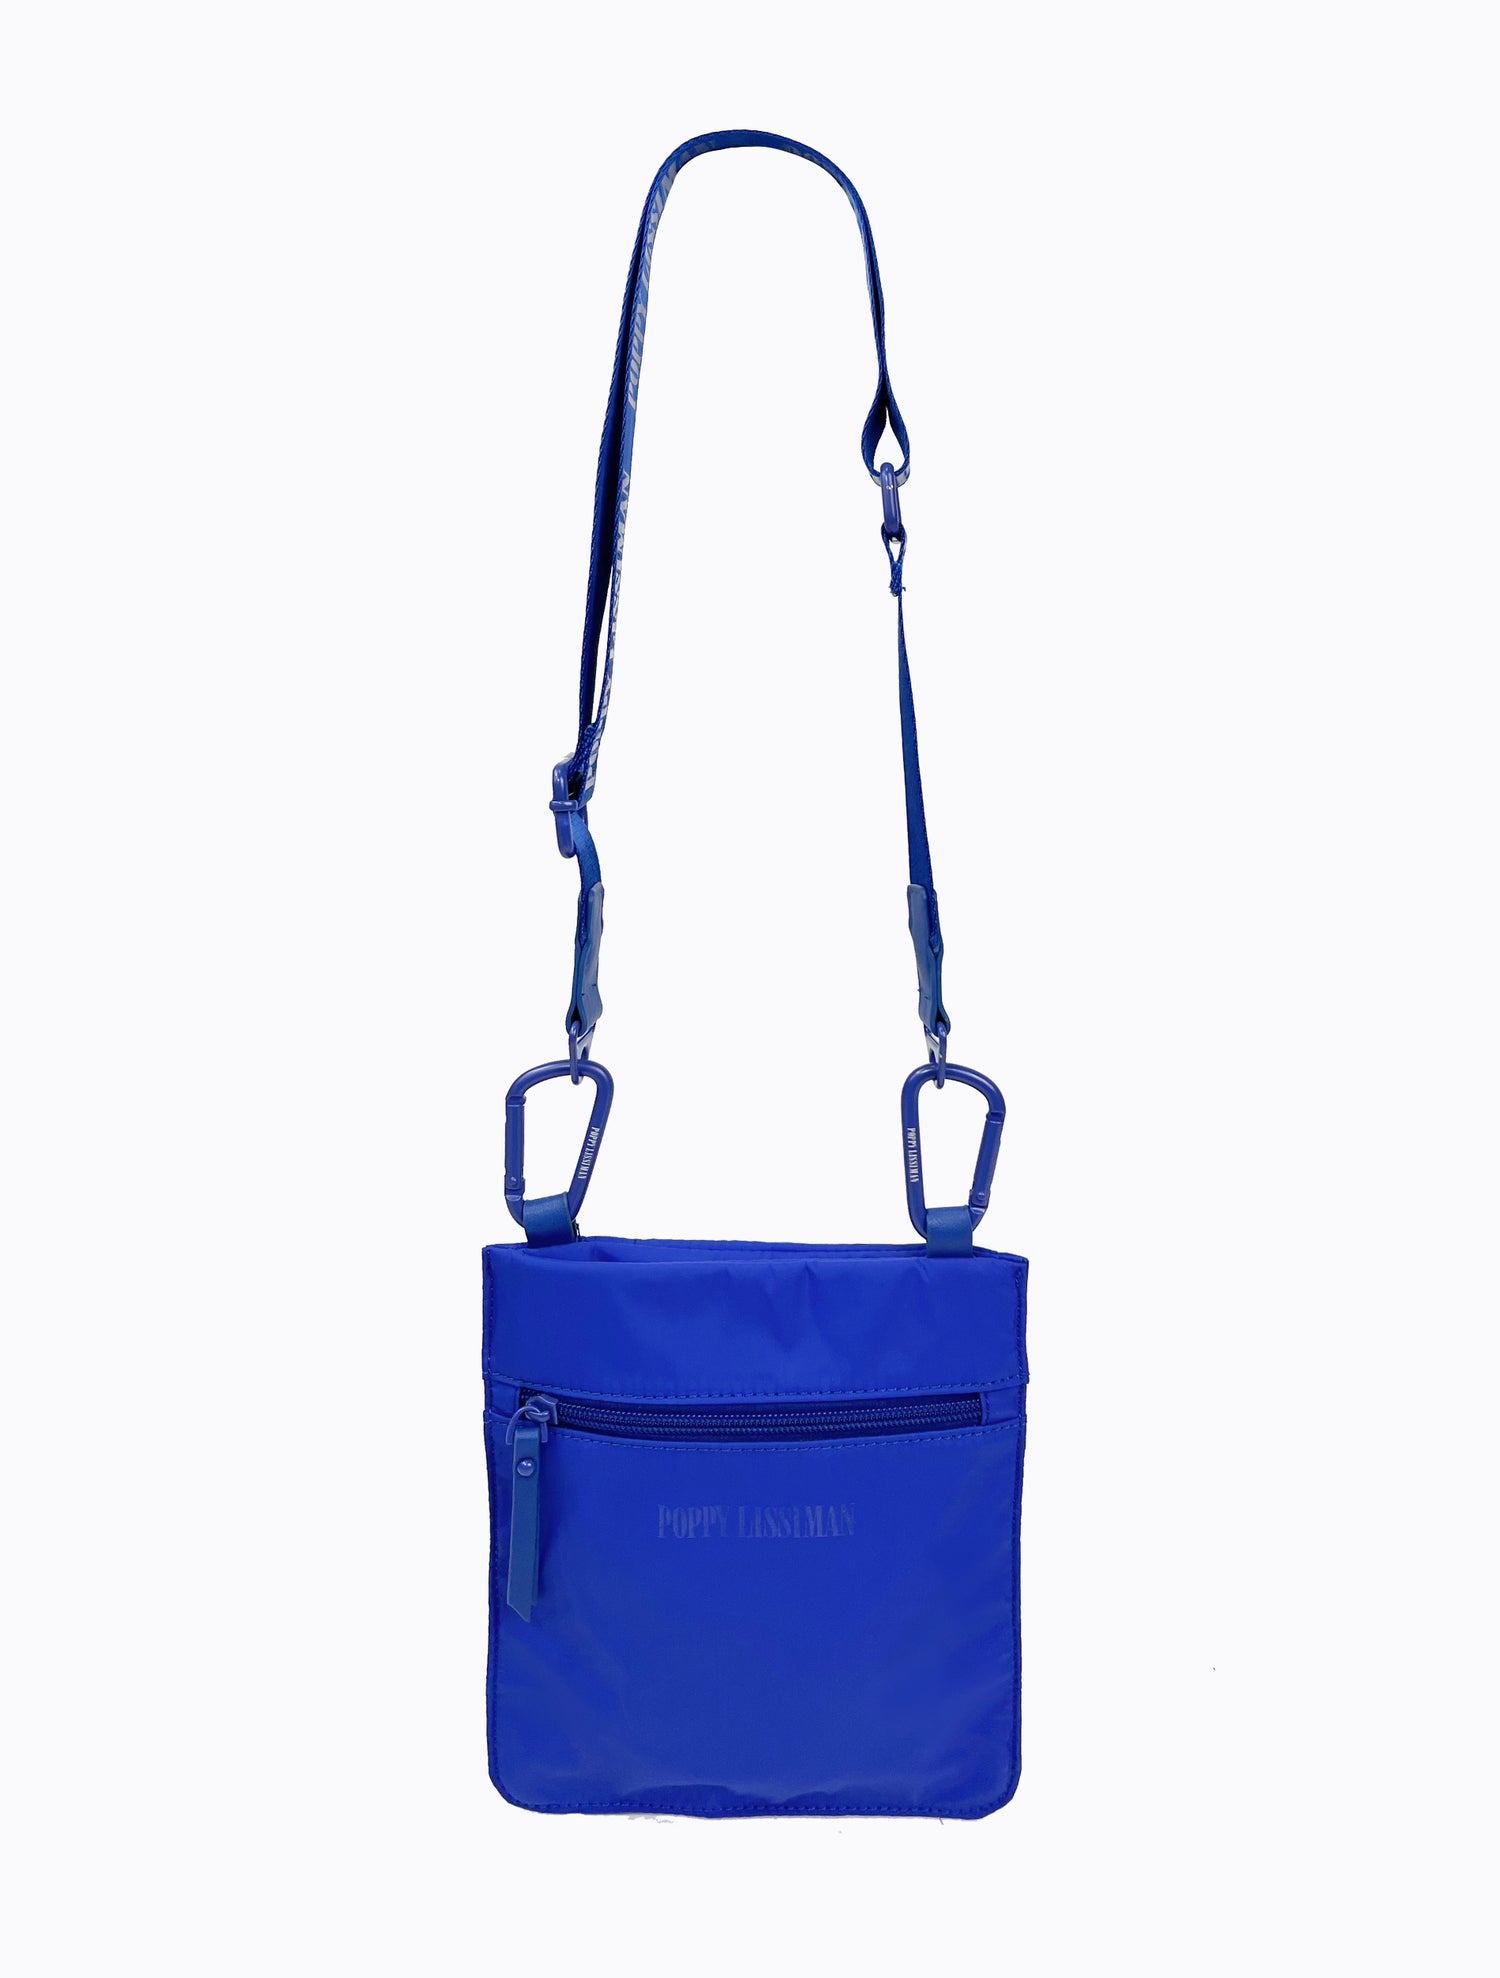 Jacques Shoulder Bag - Electric Blue – Poppy Lissiman